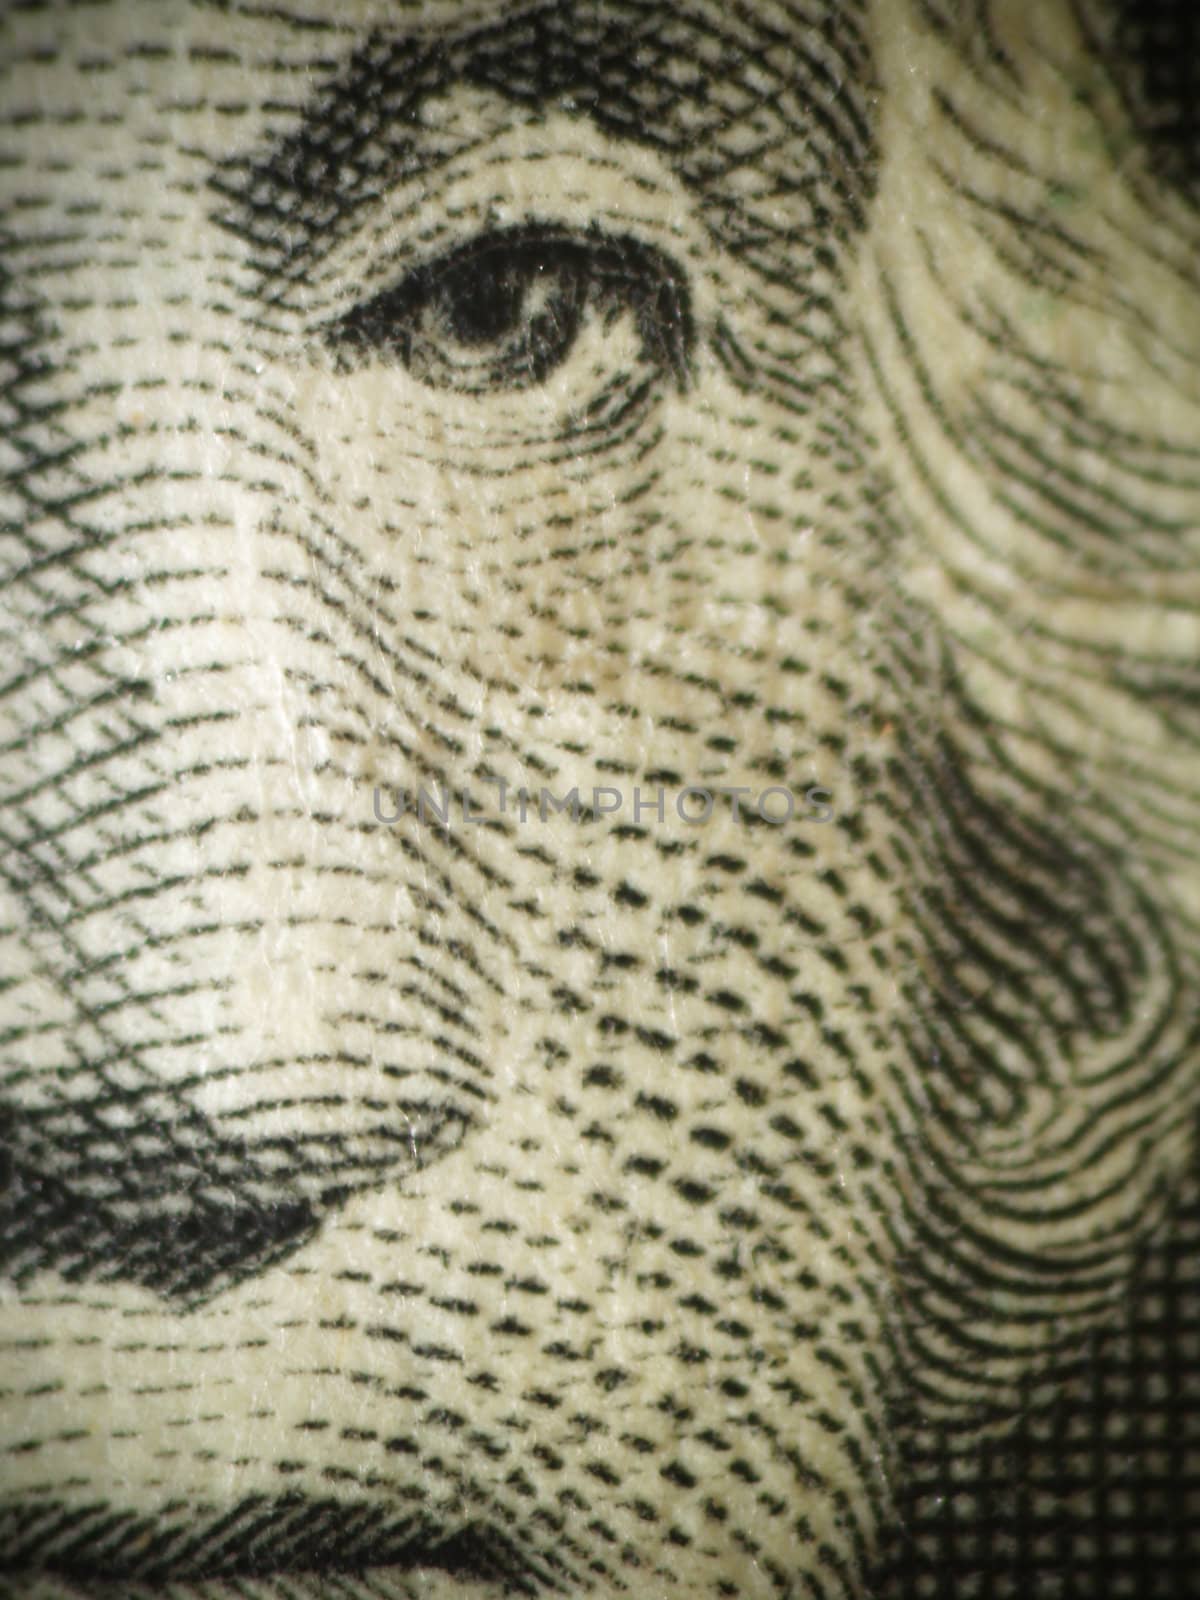 Macro of Washington's face on a dollar bill